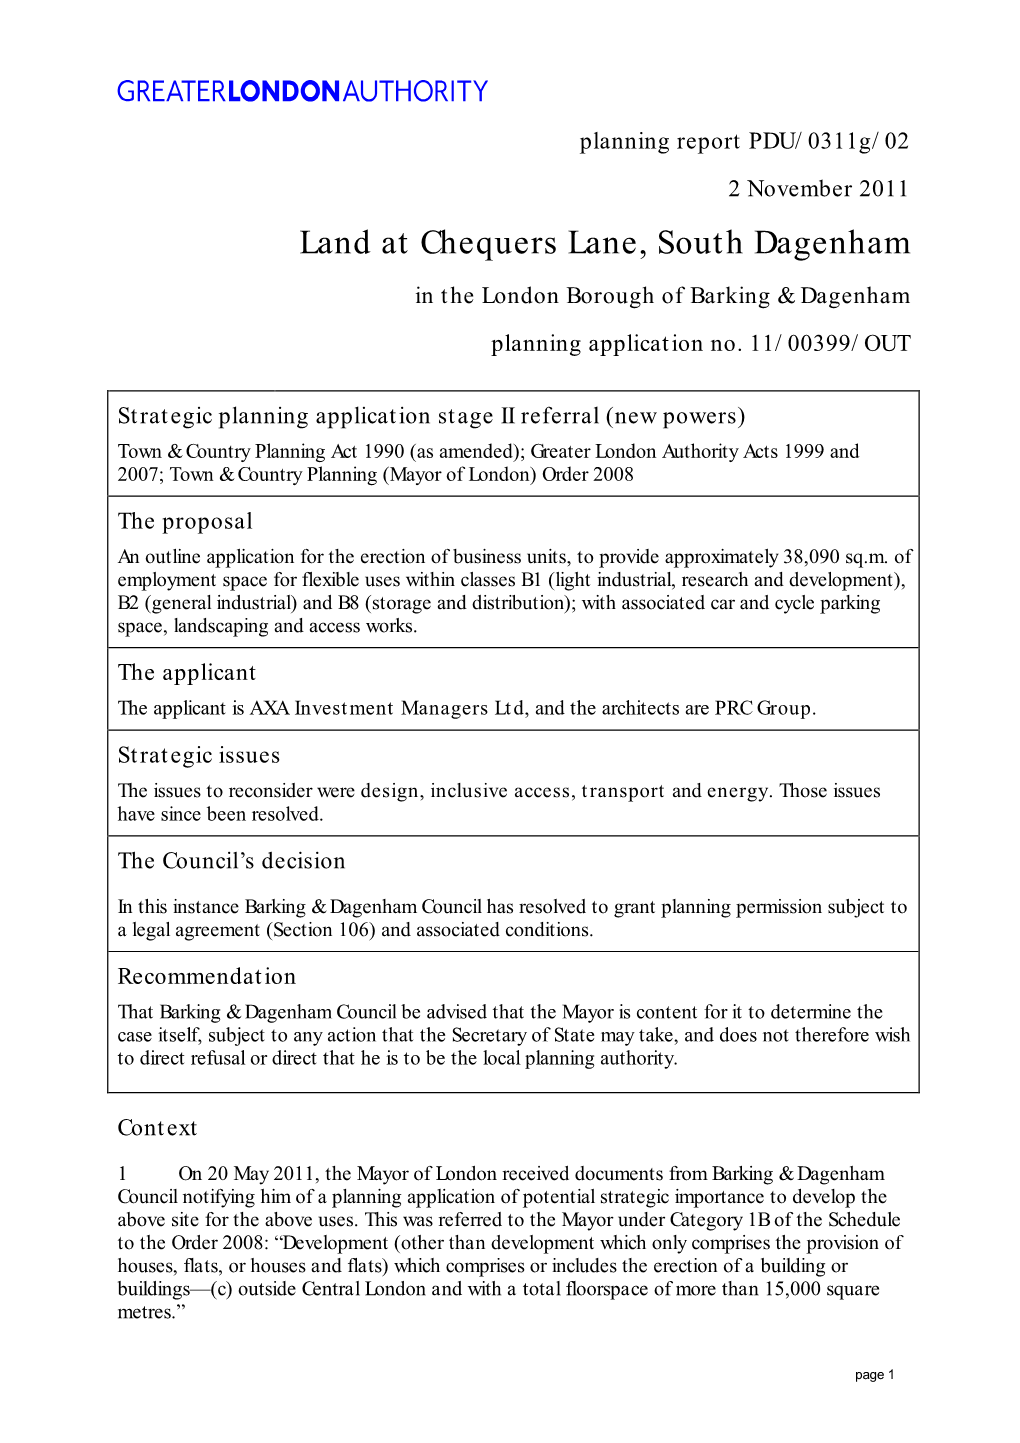 Land at Chequers Lane, South Dagenham in the London Borough of Barking & Dagenham Planning Application No